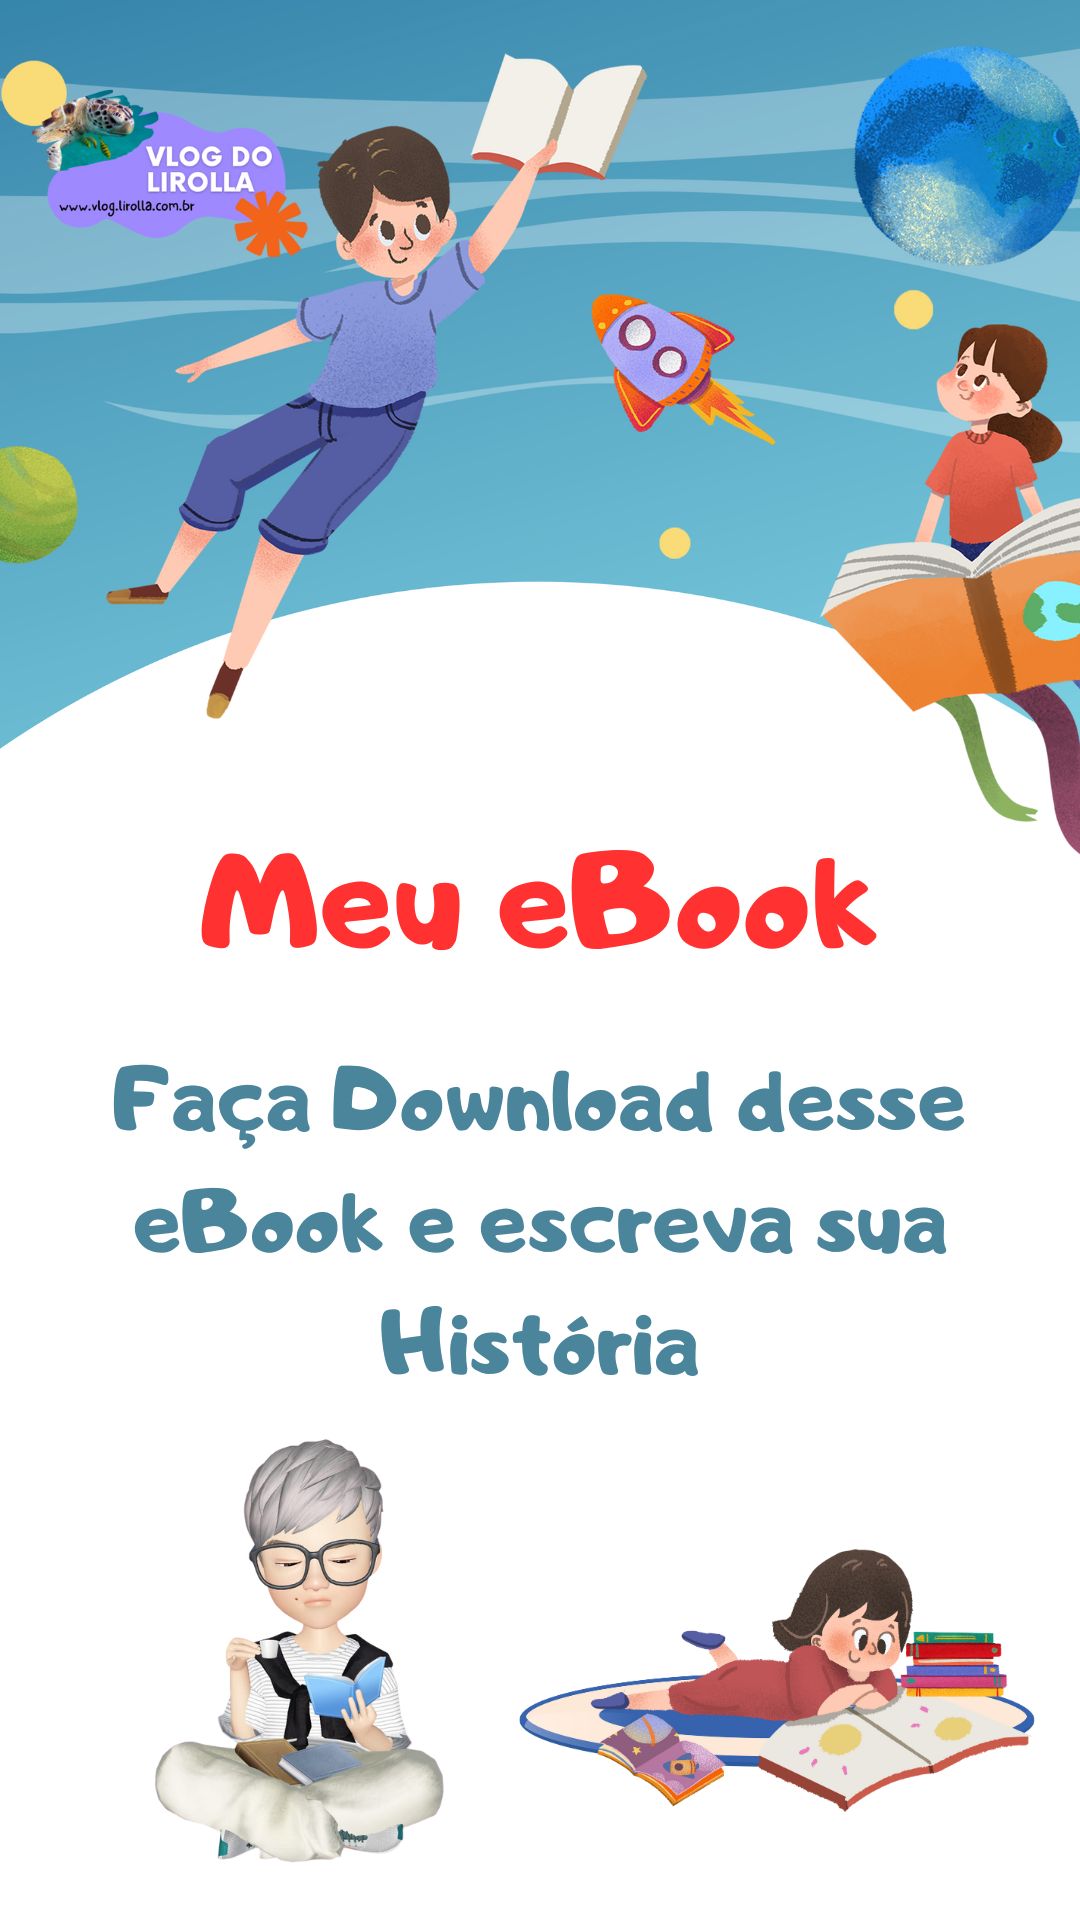 vlogdolirolla-capa-ebook-infantil